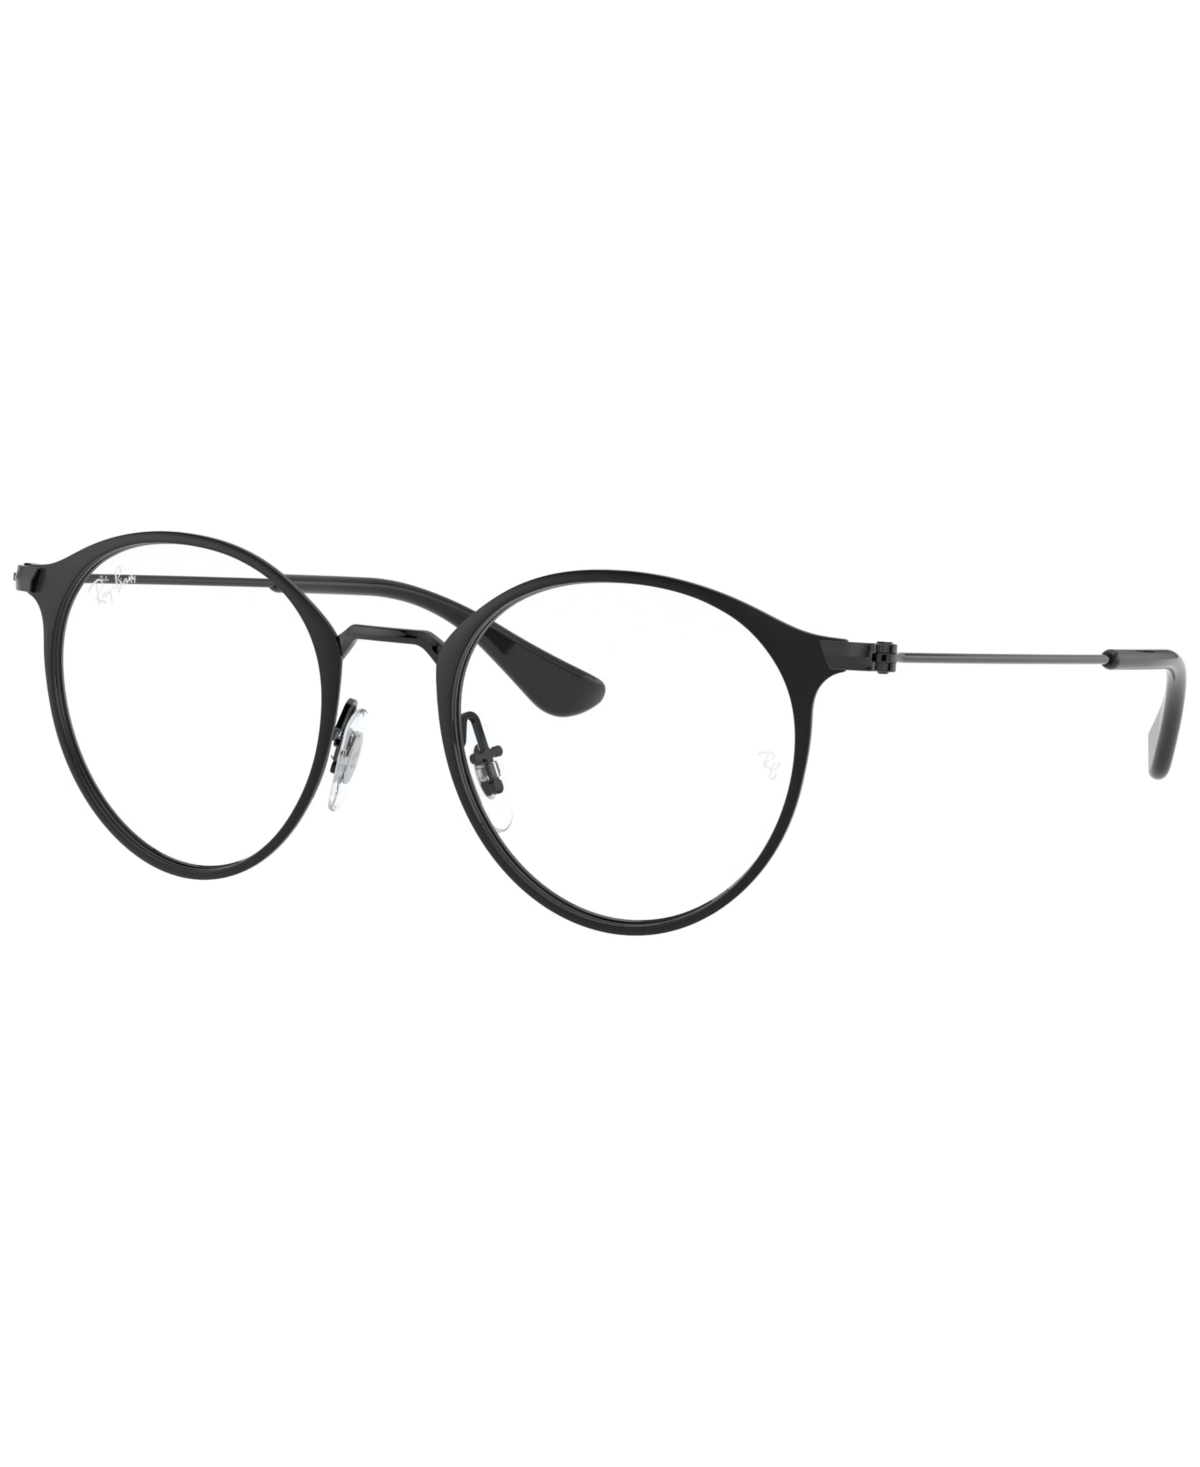 Child Eyeglasses, RB1053 - Black